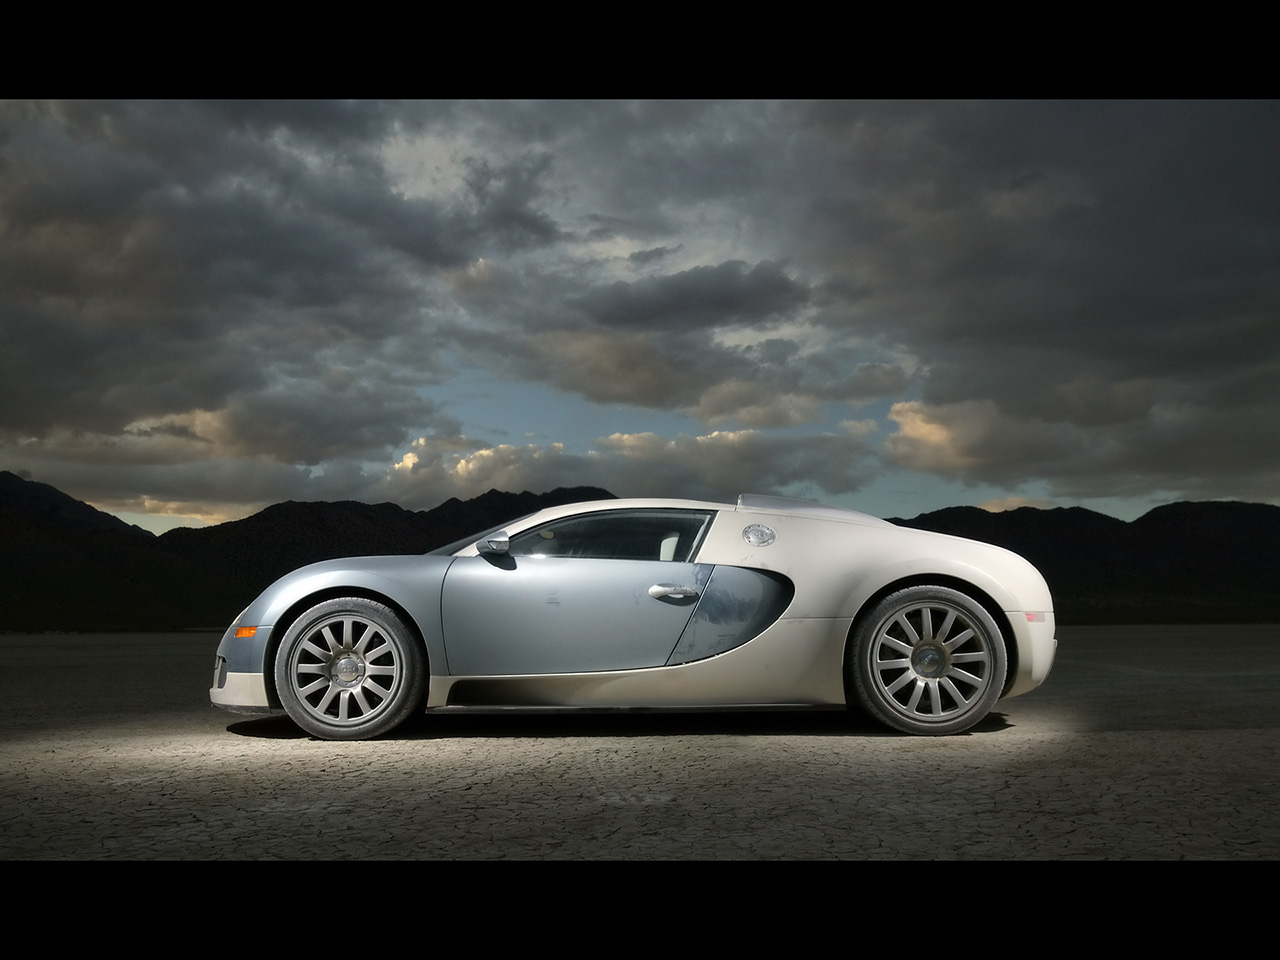 http://4.bp.blogspot.com/-a76Uyv923Js/TWfvo4u9TyI/AAAAAAAABVE/Ztnq9WtBwOs/s1600/2007-Bugatti-Veyron-Side.jpg